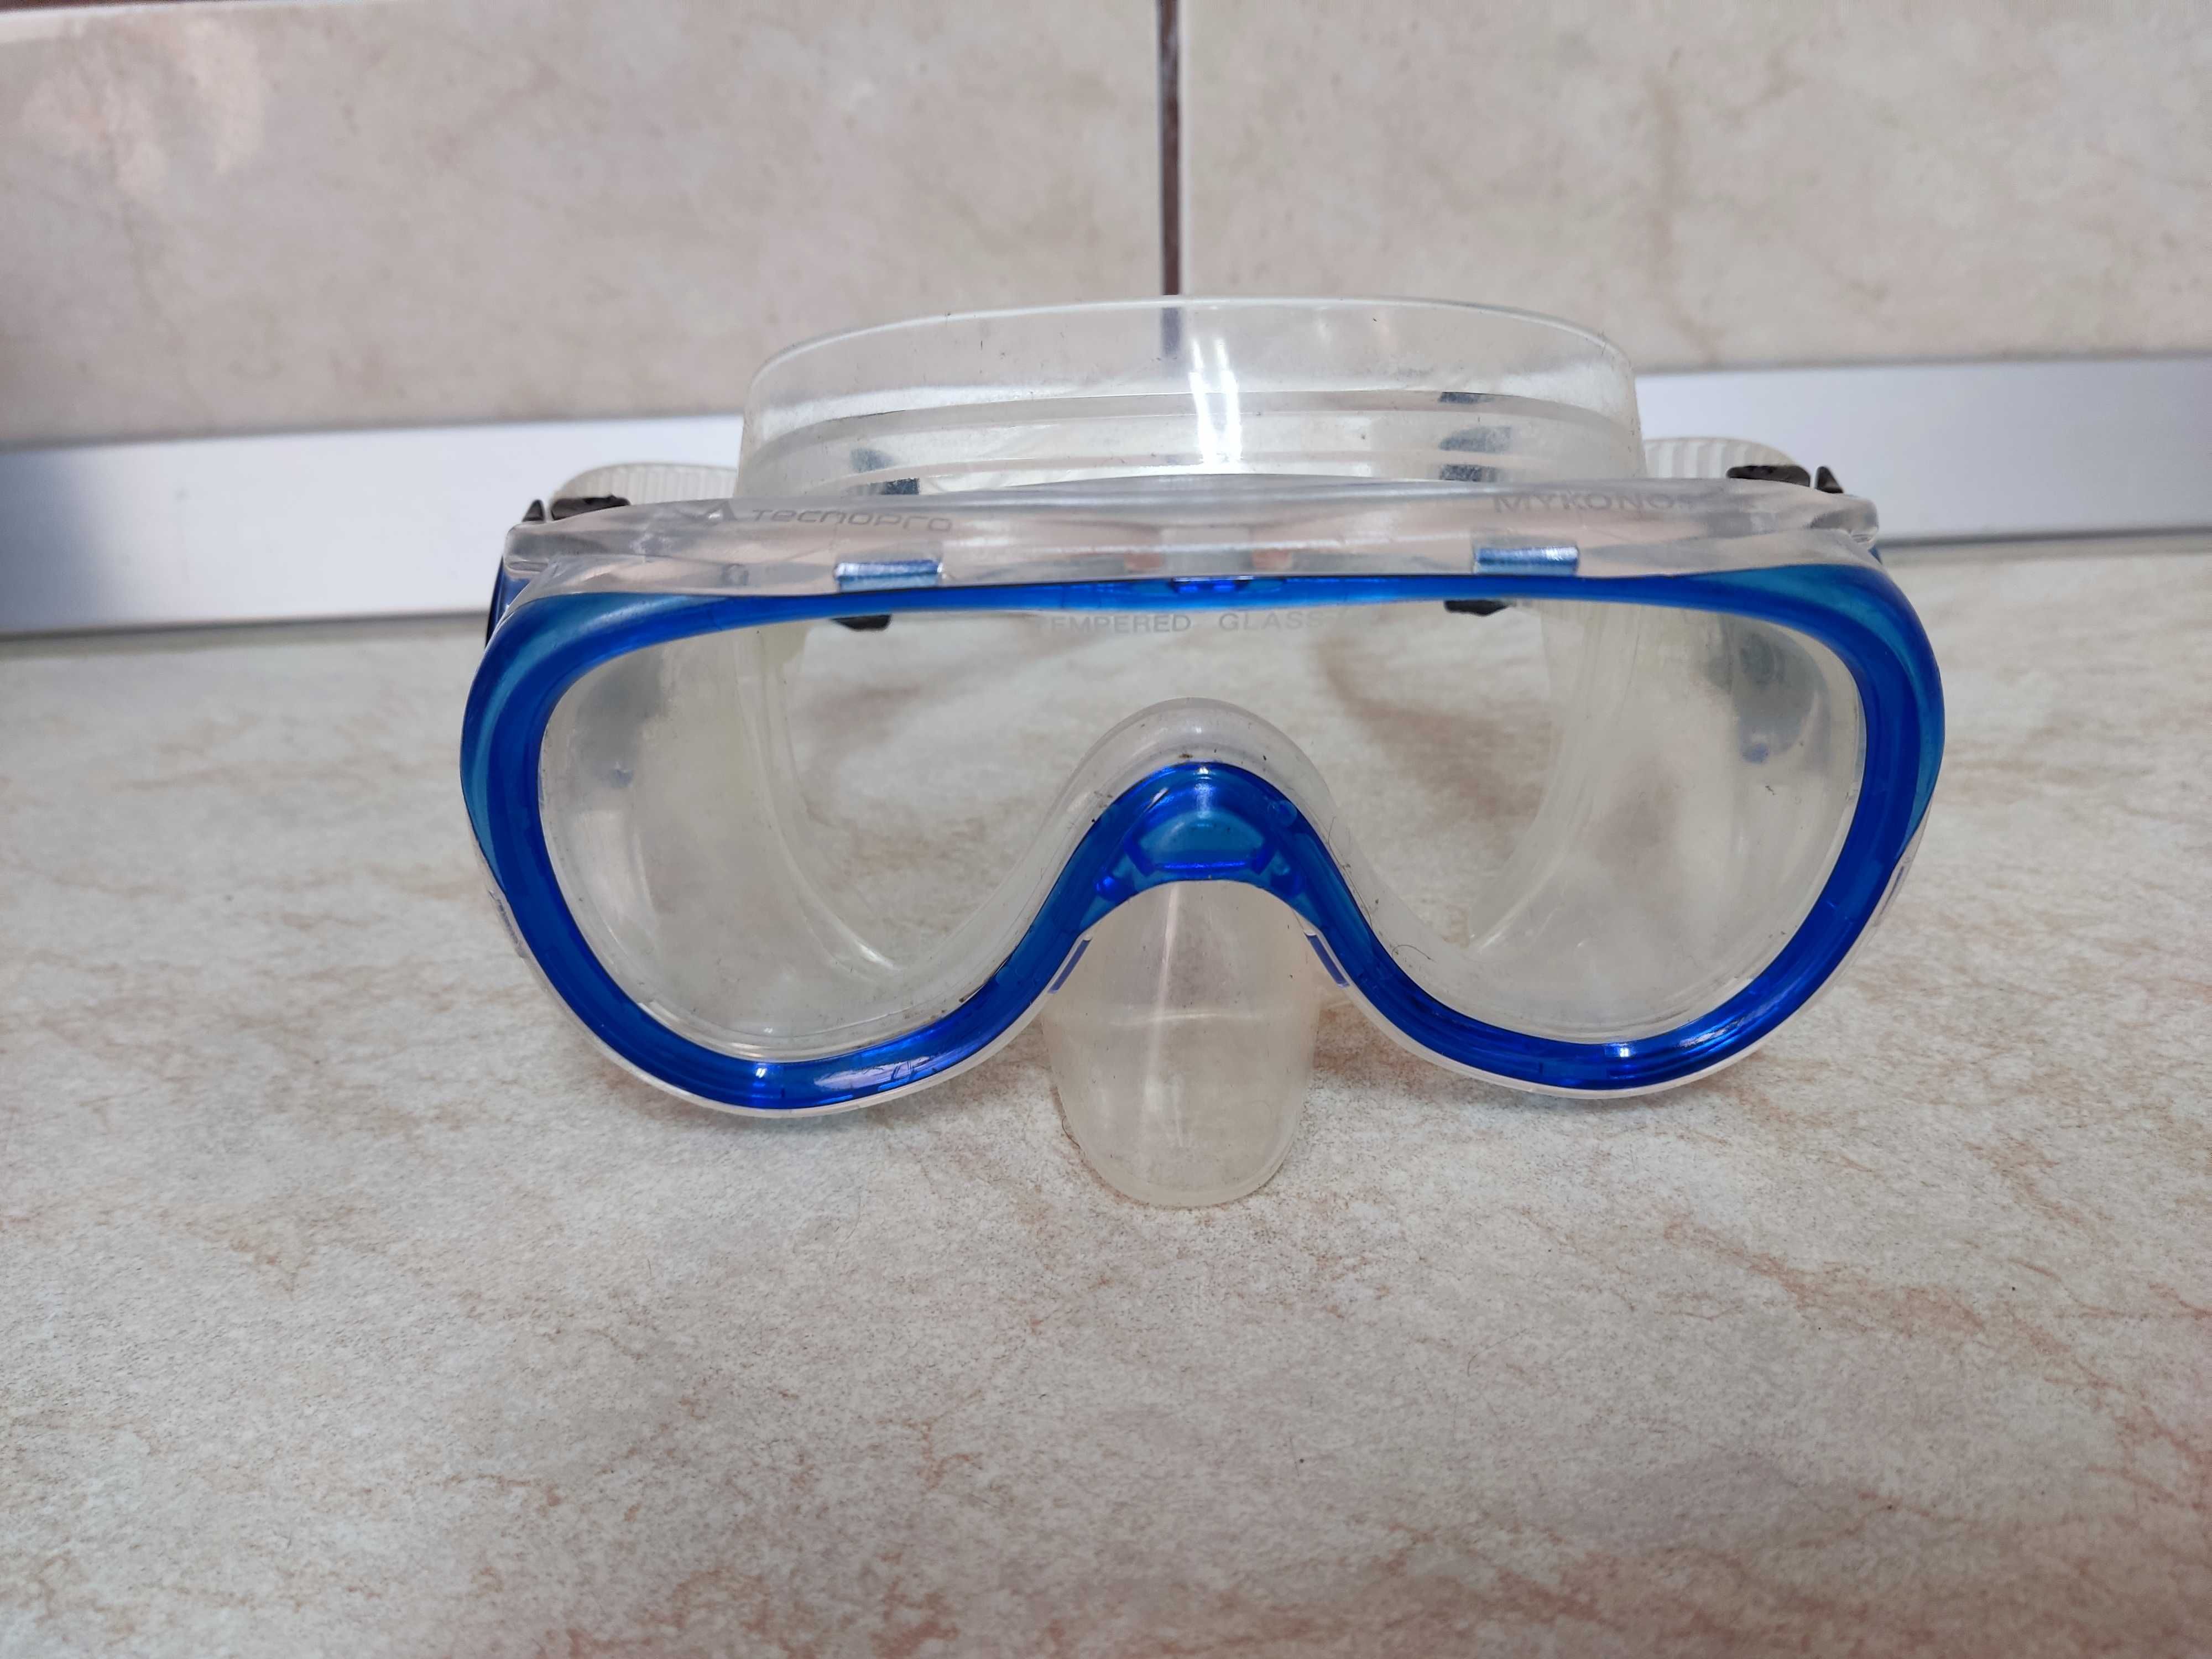 Ochelari Scufundari cu protectie pentru nas  Tempered Glass